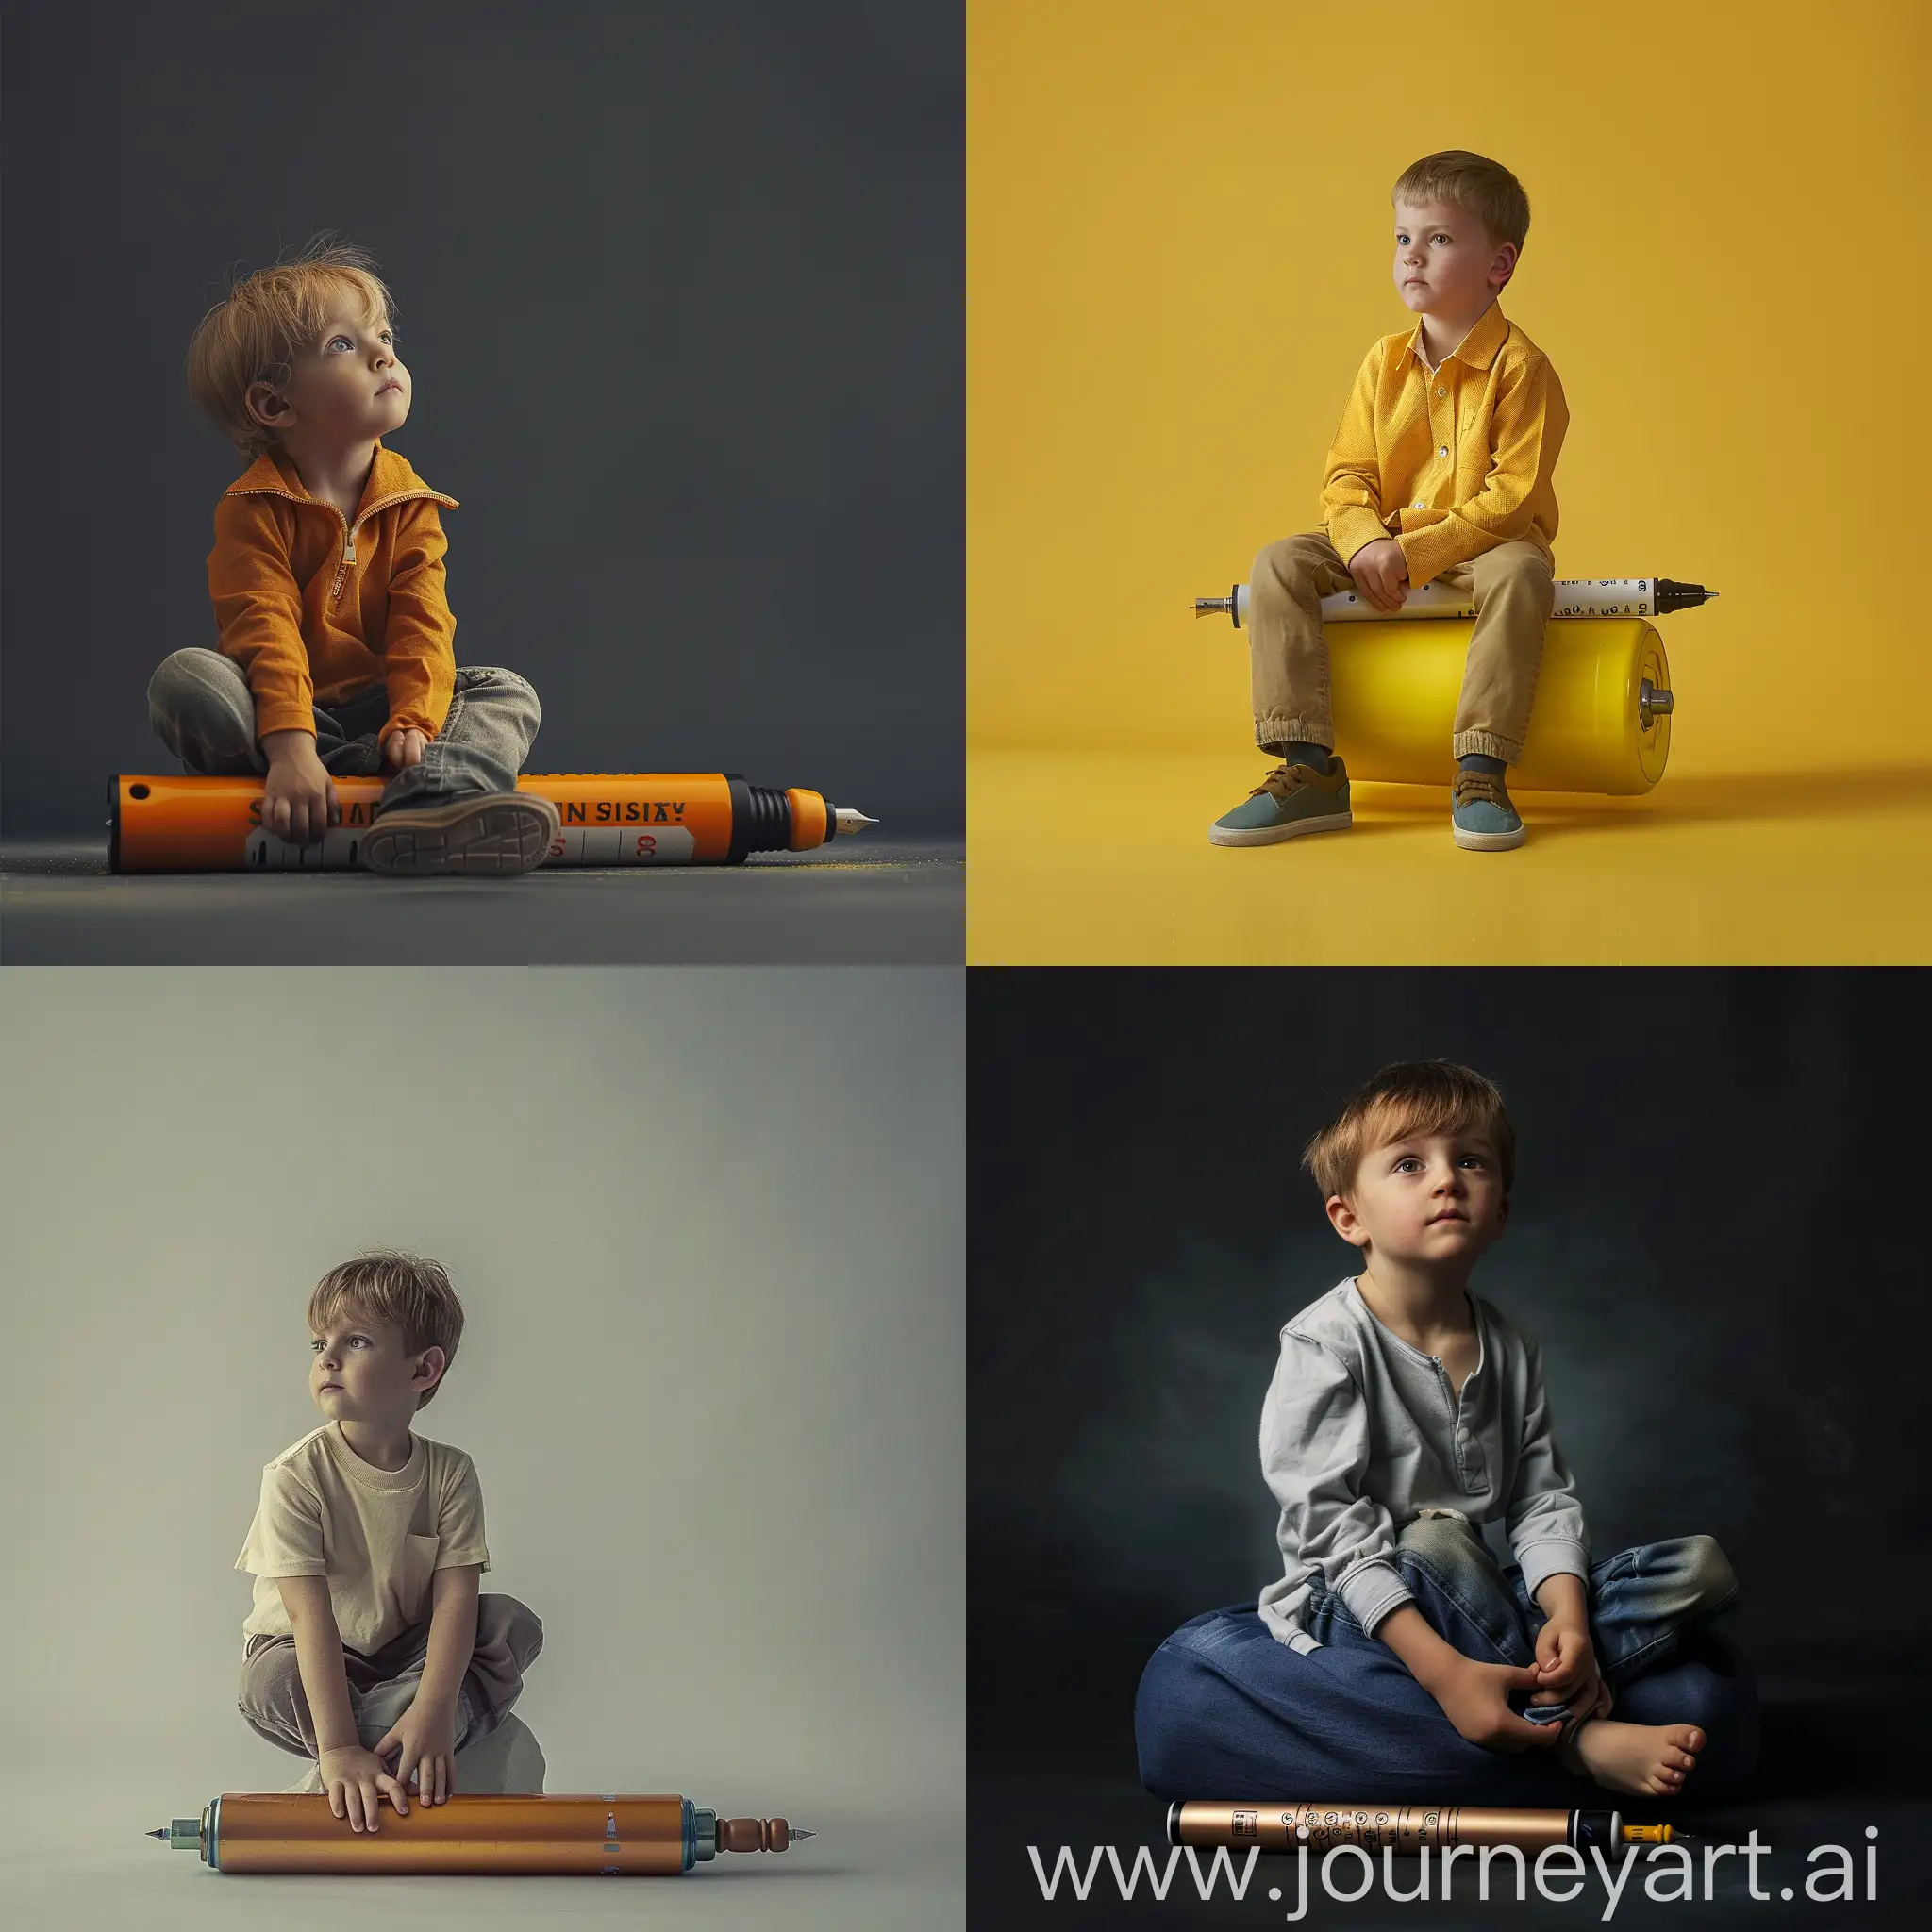 A boy sitting on a pen battery